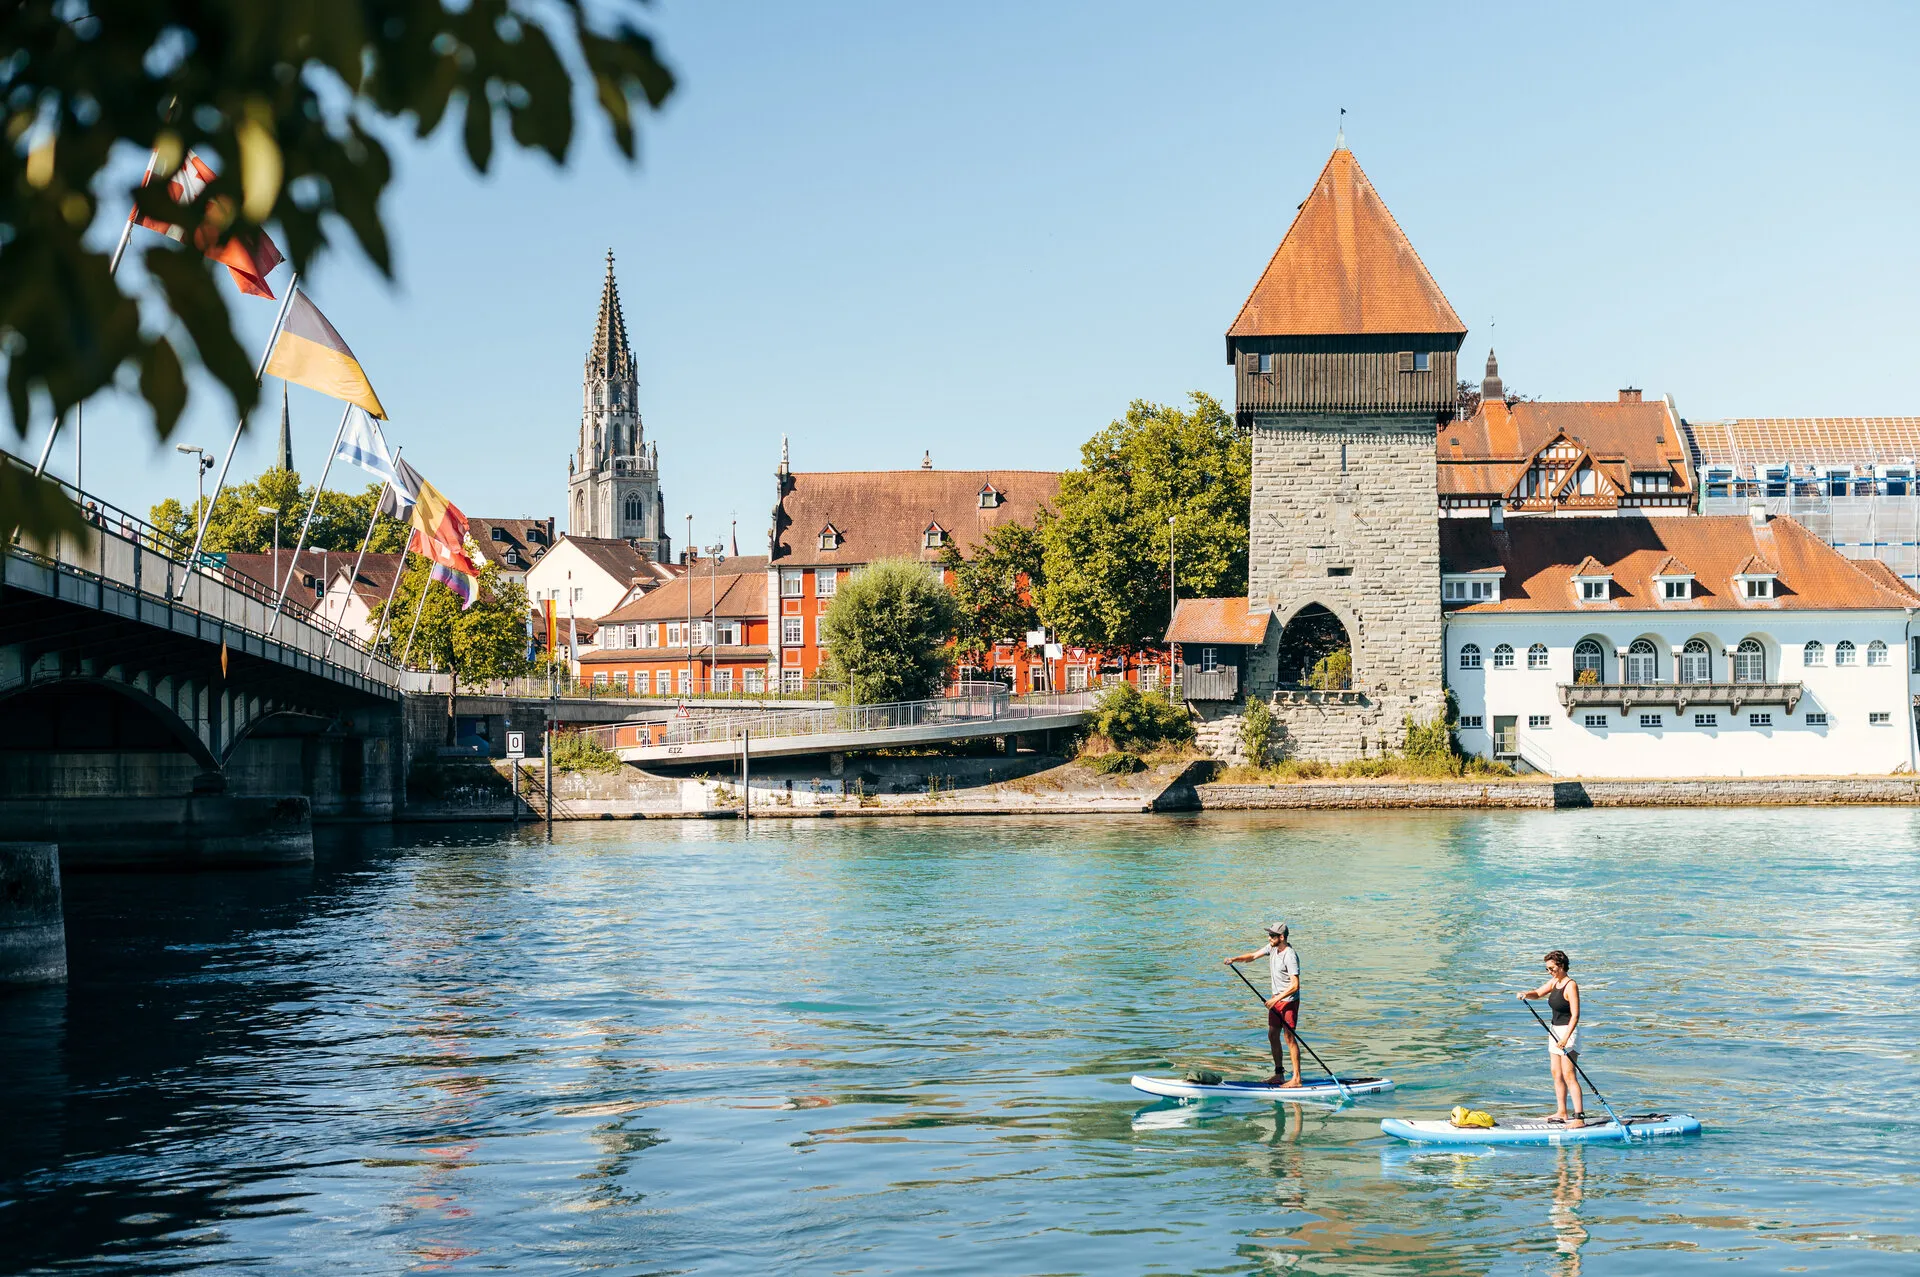 Lake Constance-Switzerland in Switzerland, Europe | Lakes - Rated 0.7